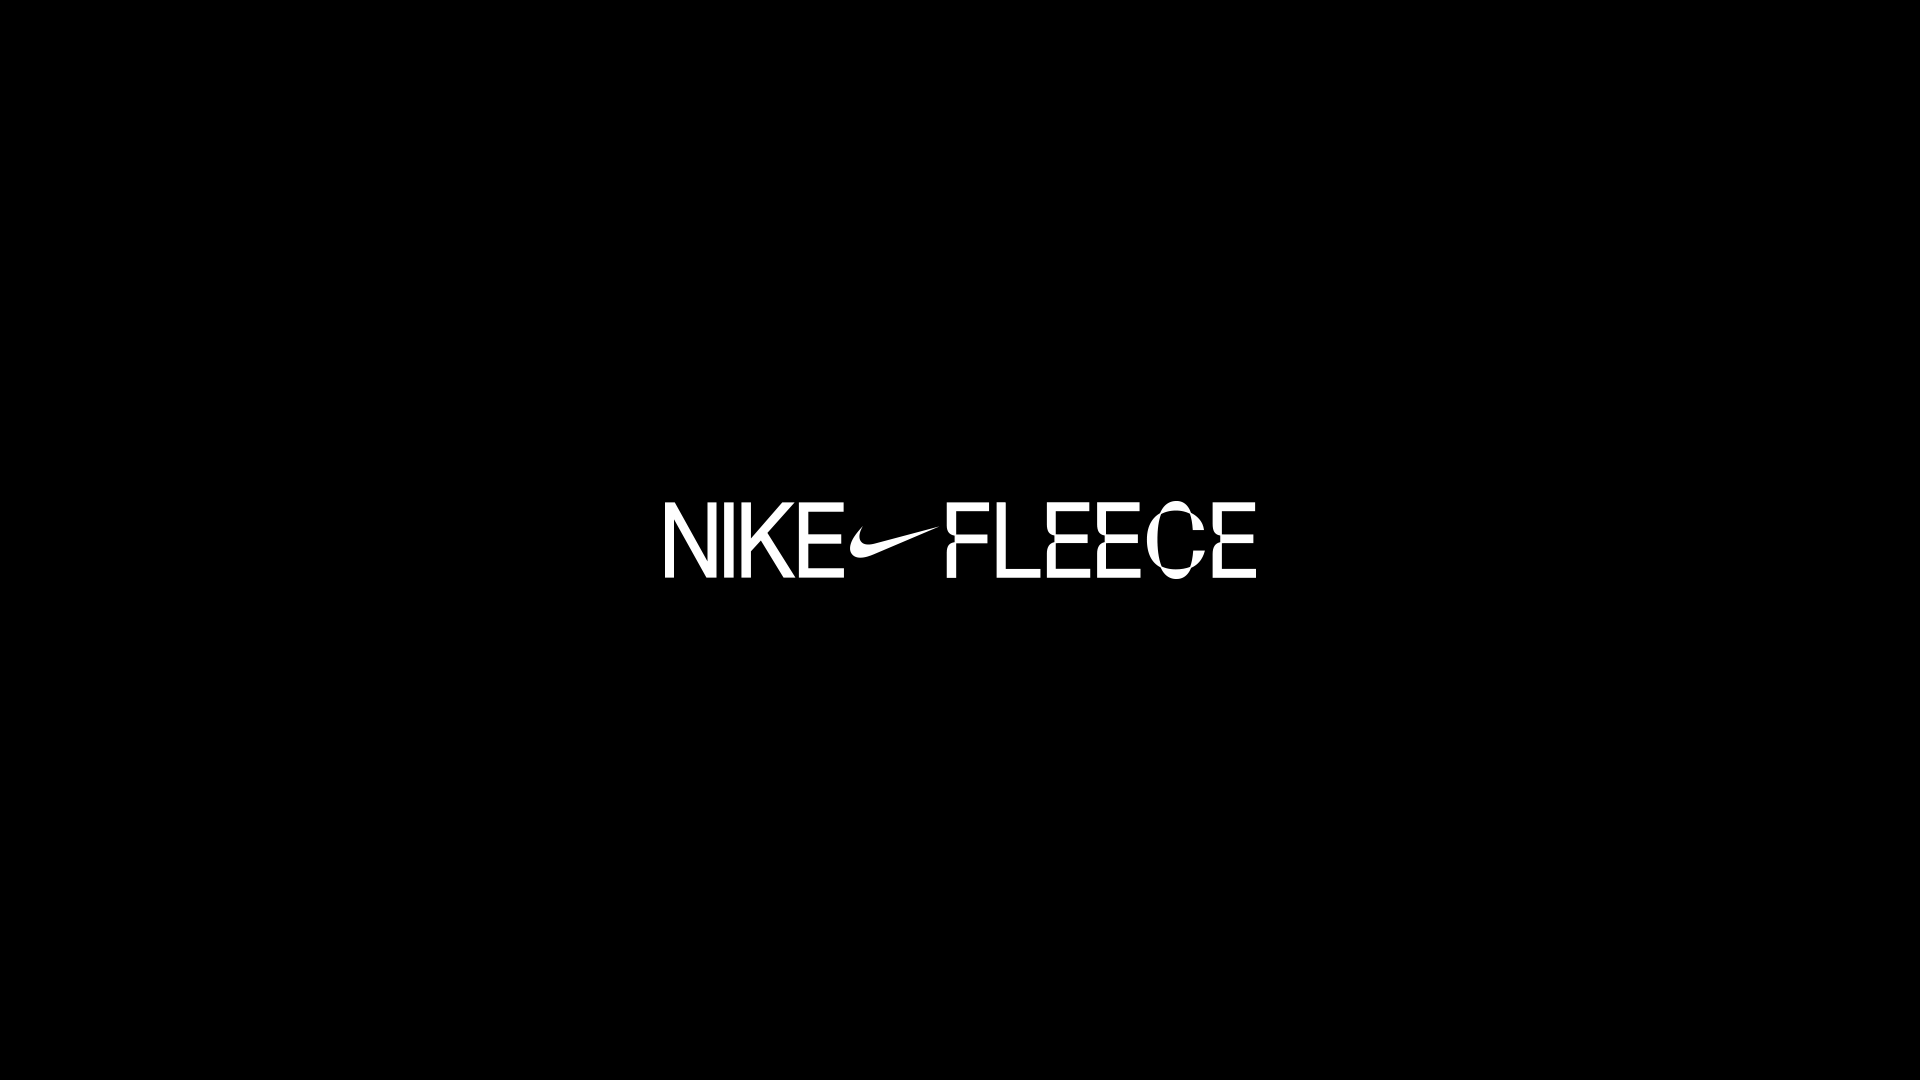 Four versions of Nike Fleece logo